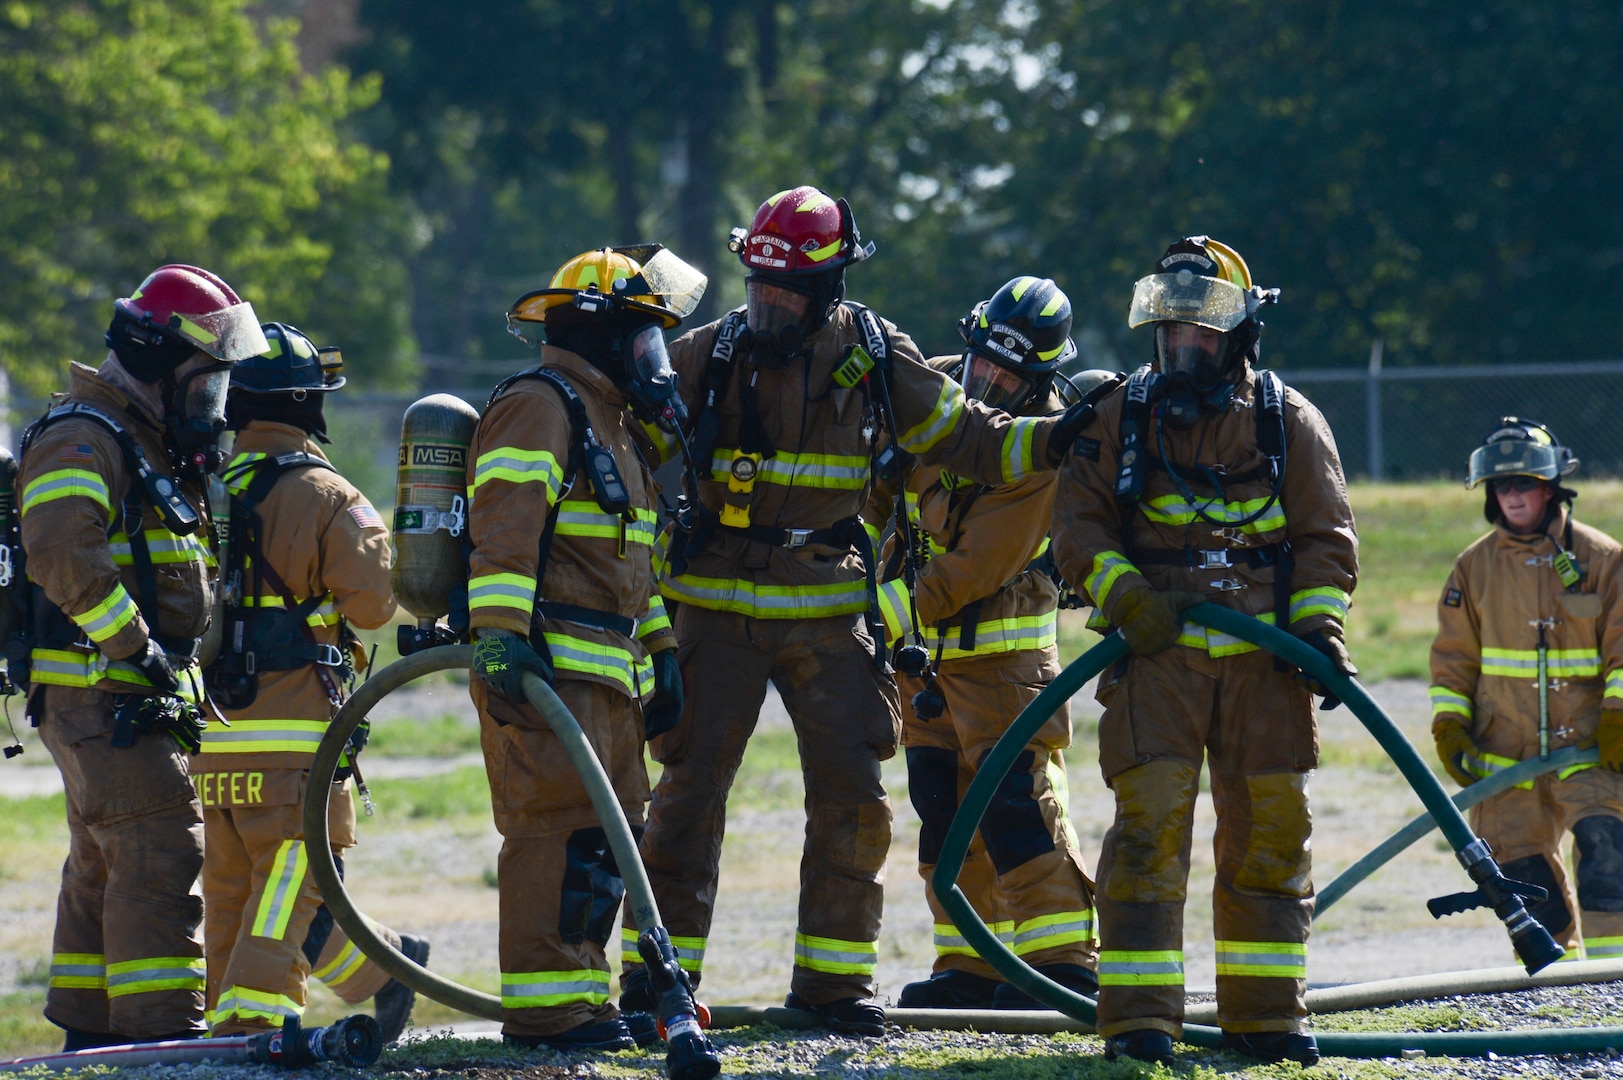 nebraska-guard-assumes-firefighter-training-stalled-by-virus-national